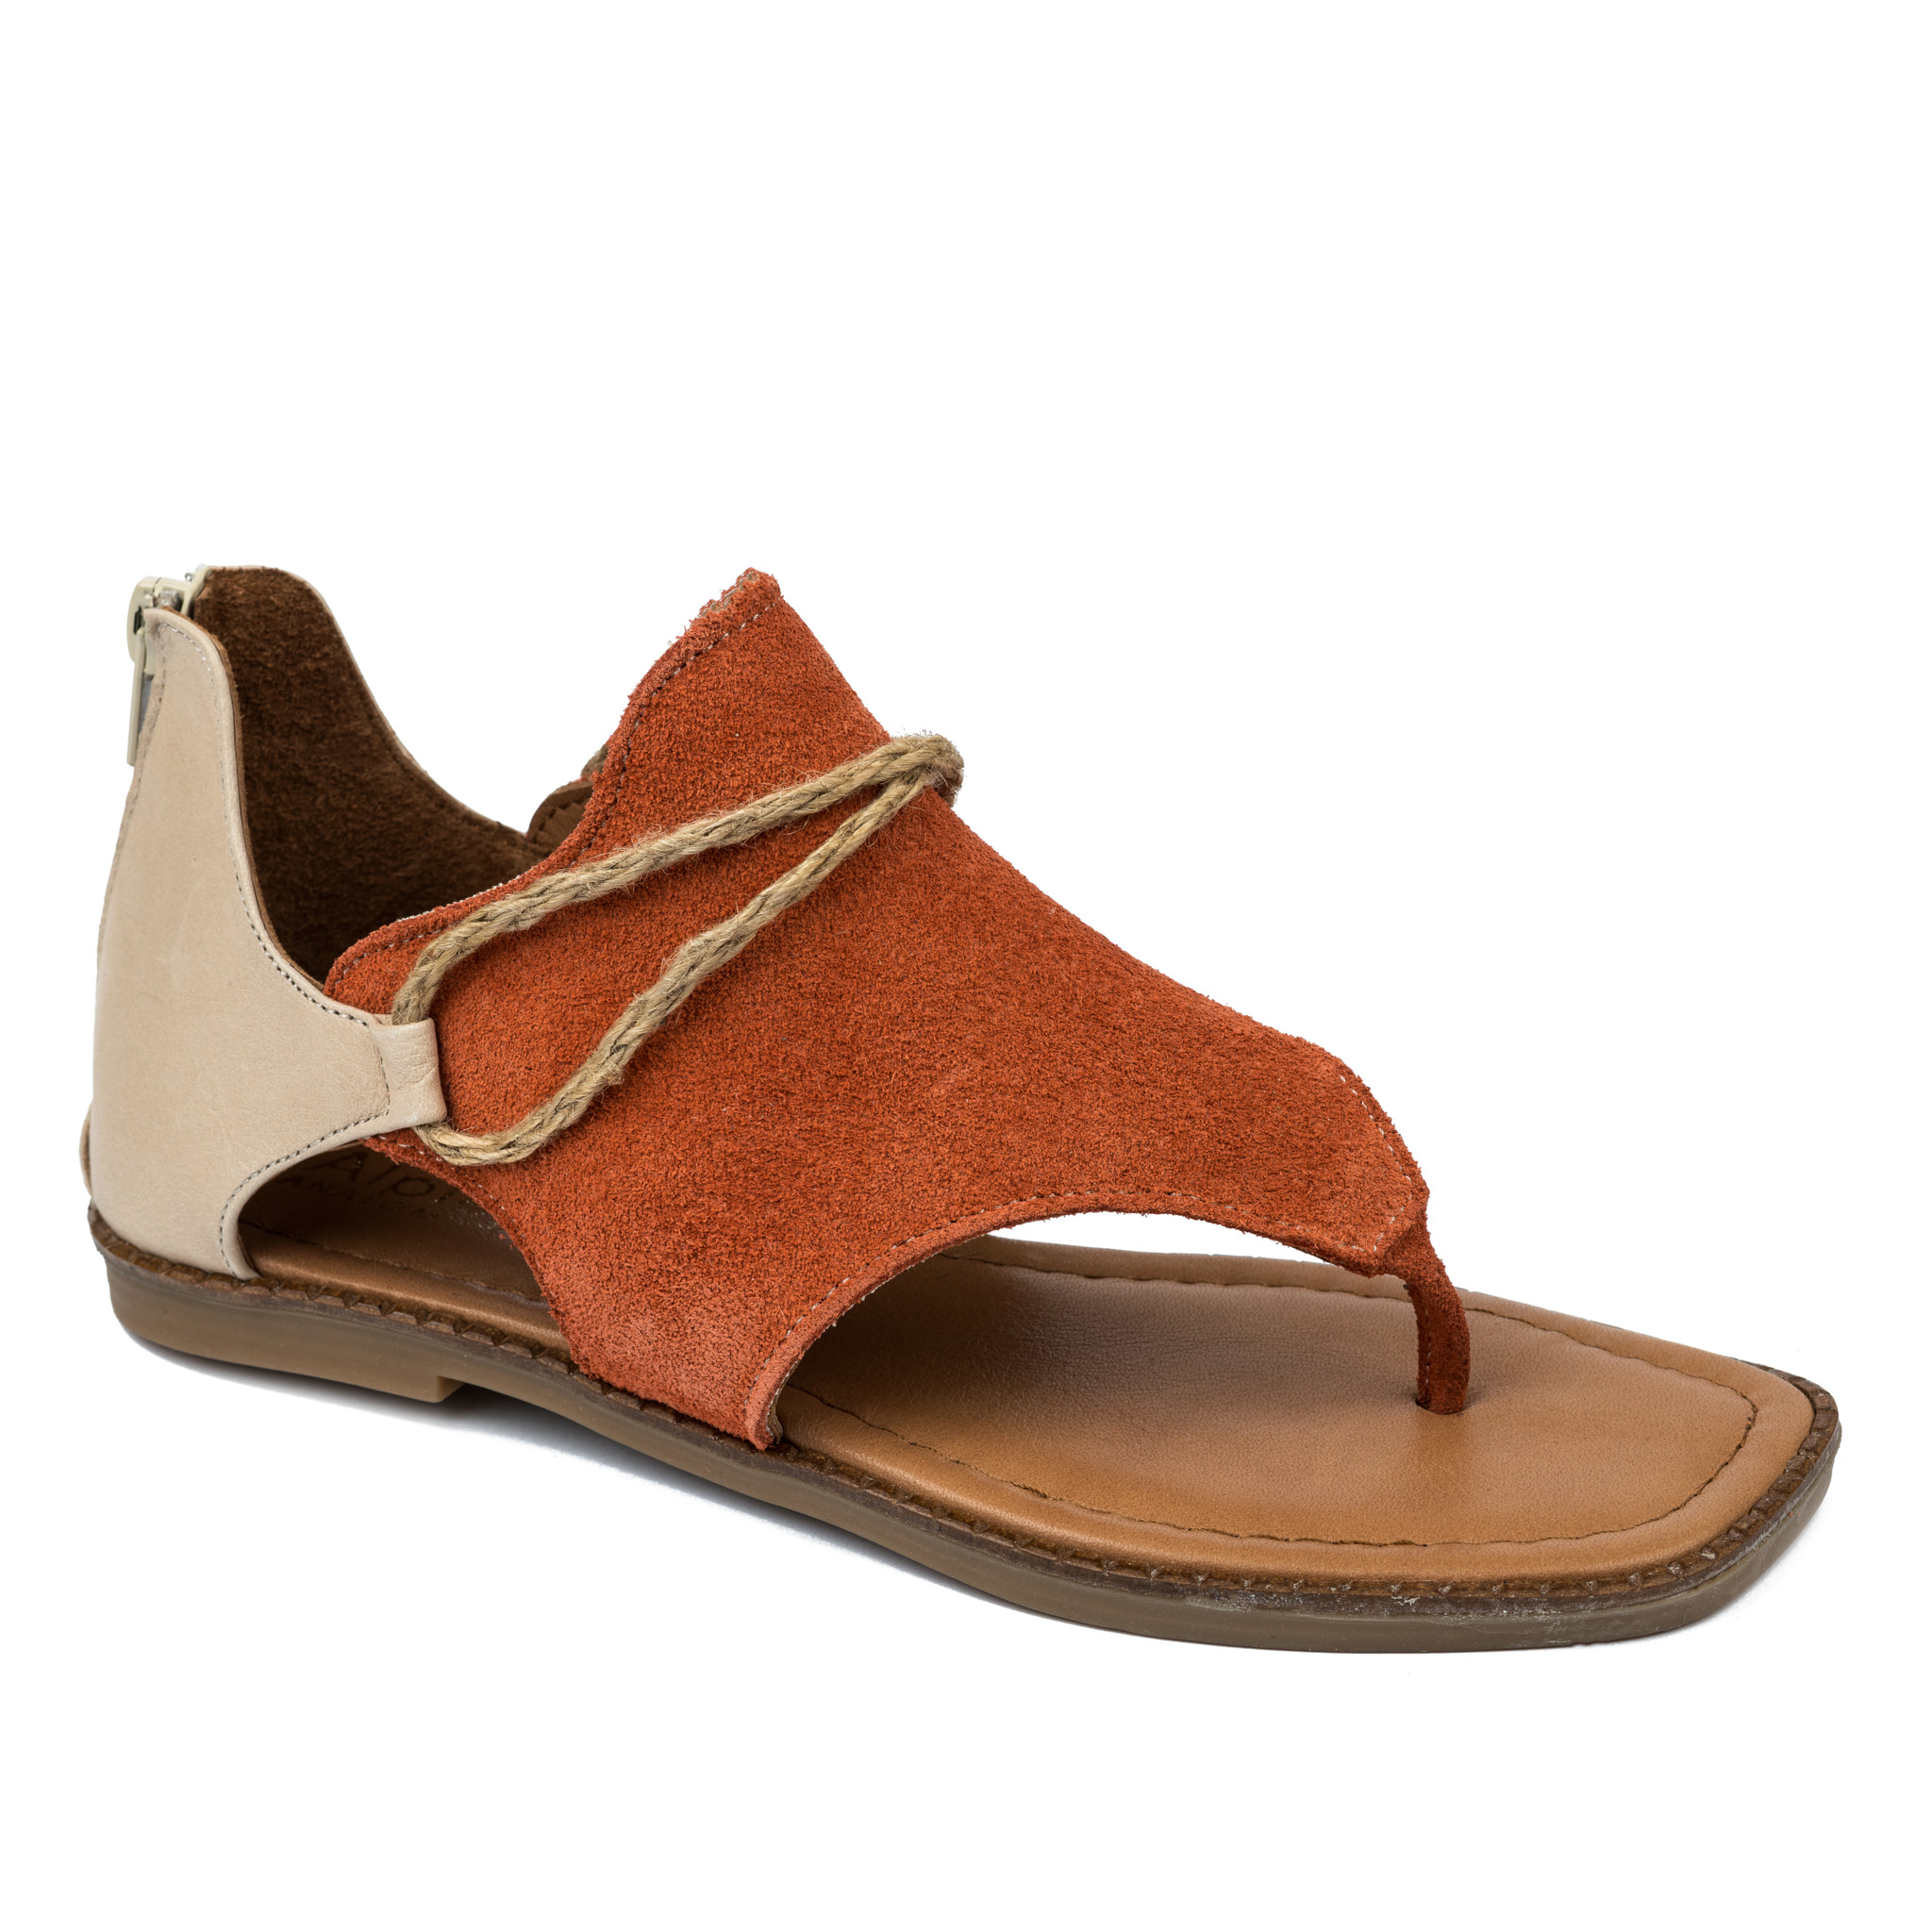 Leather sandals A643 - ORANGE